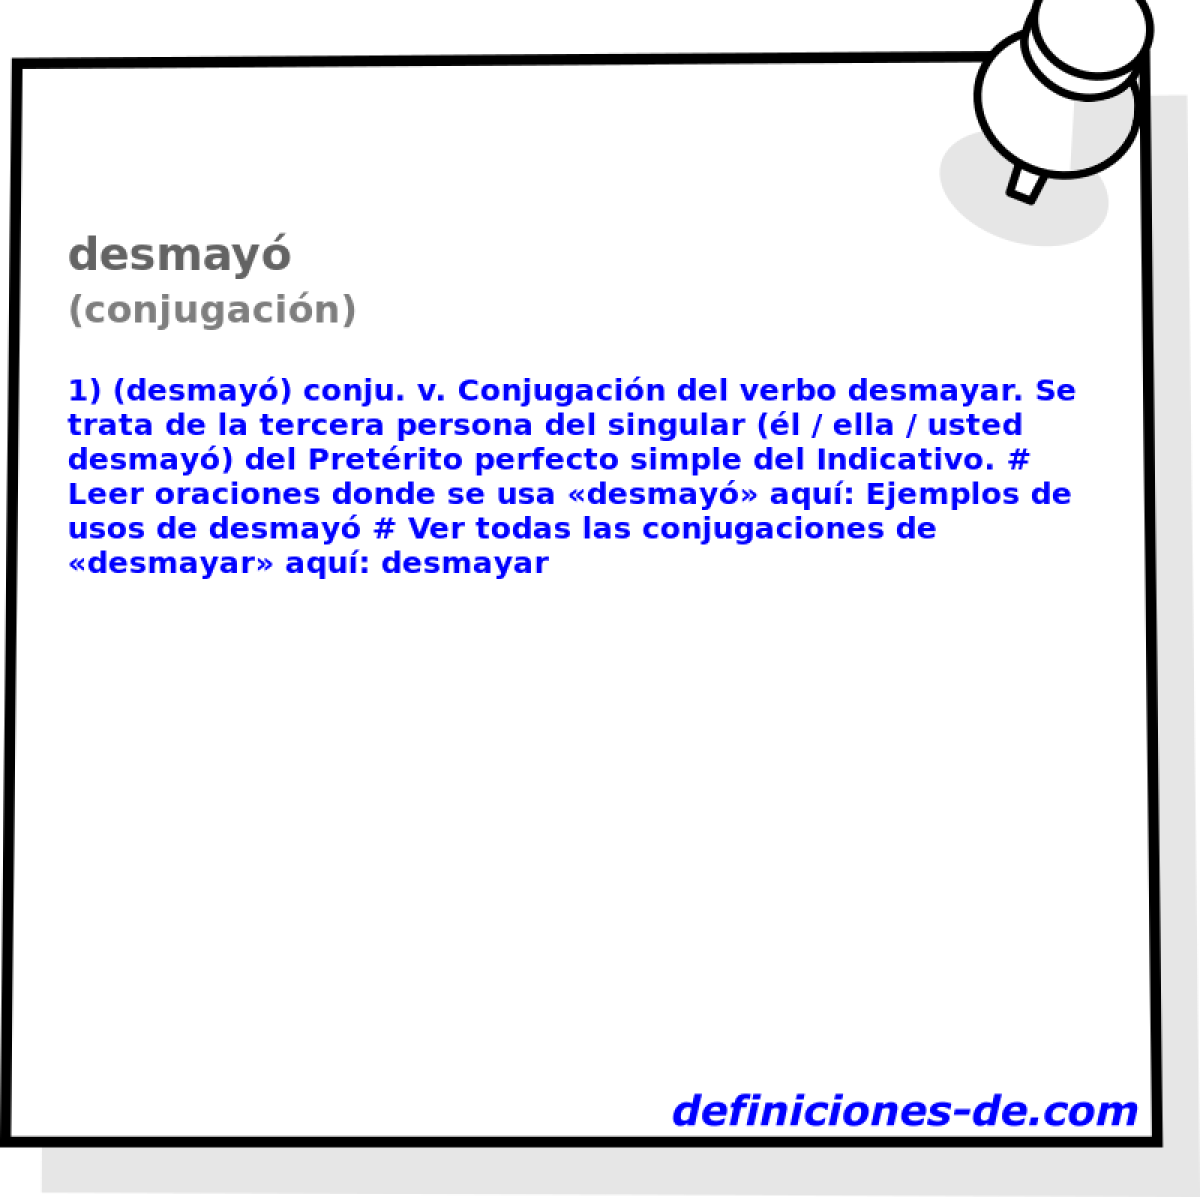 desmay (conjugacin)